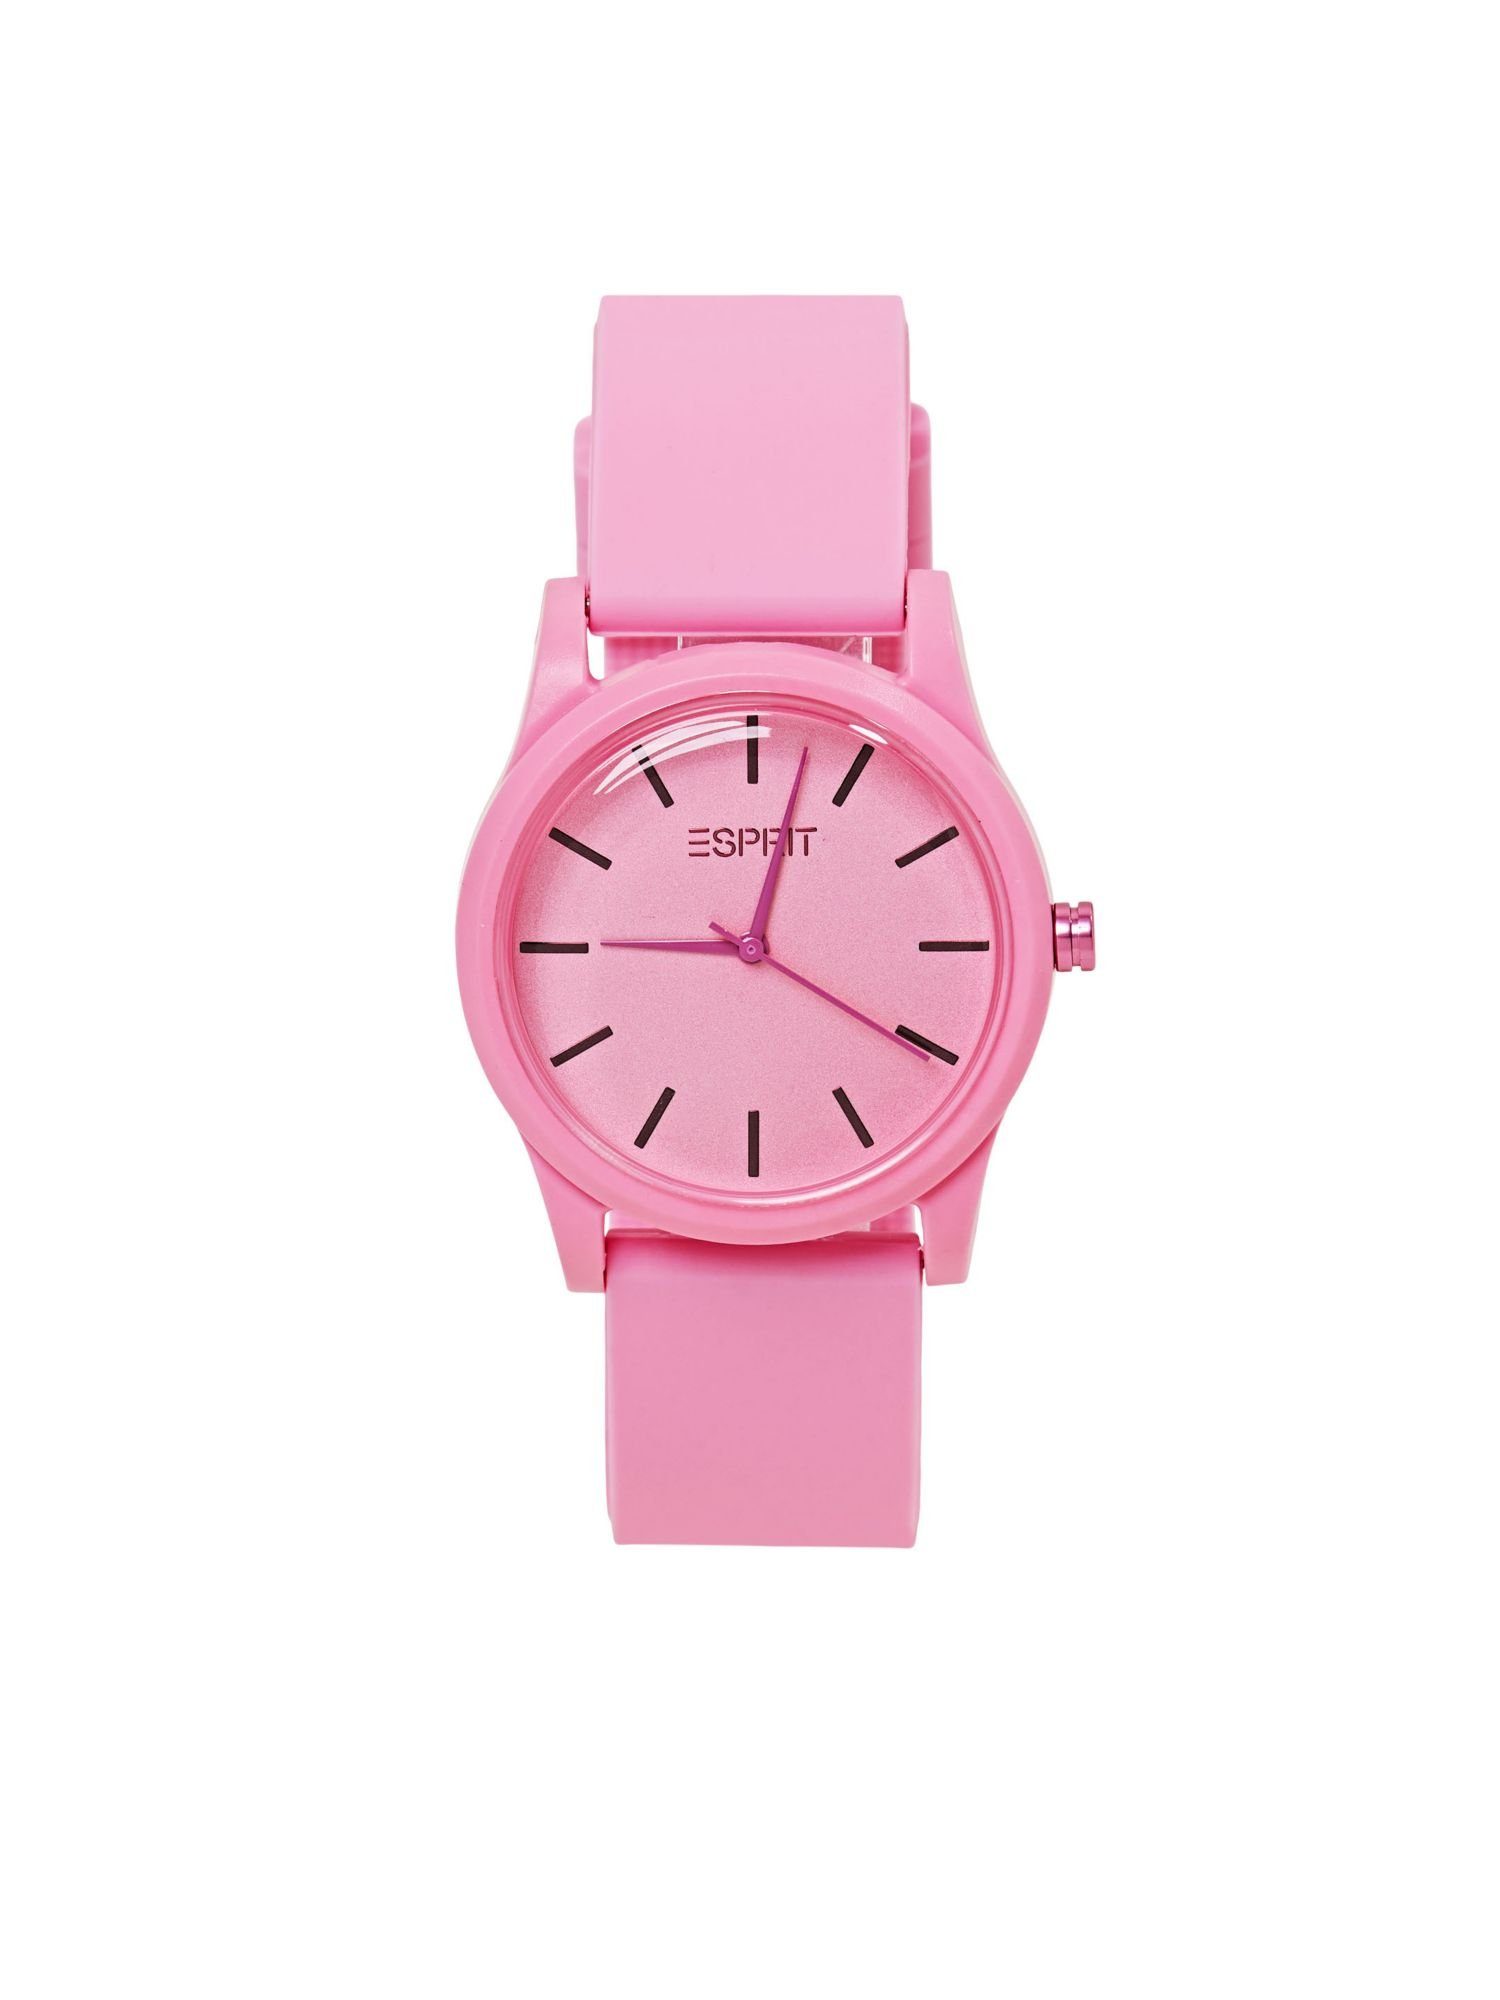 Esprit Chronograph Farbige Uhr mit Gummiarmband pink